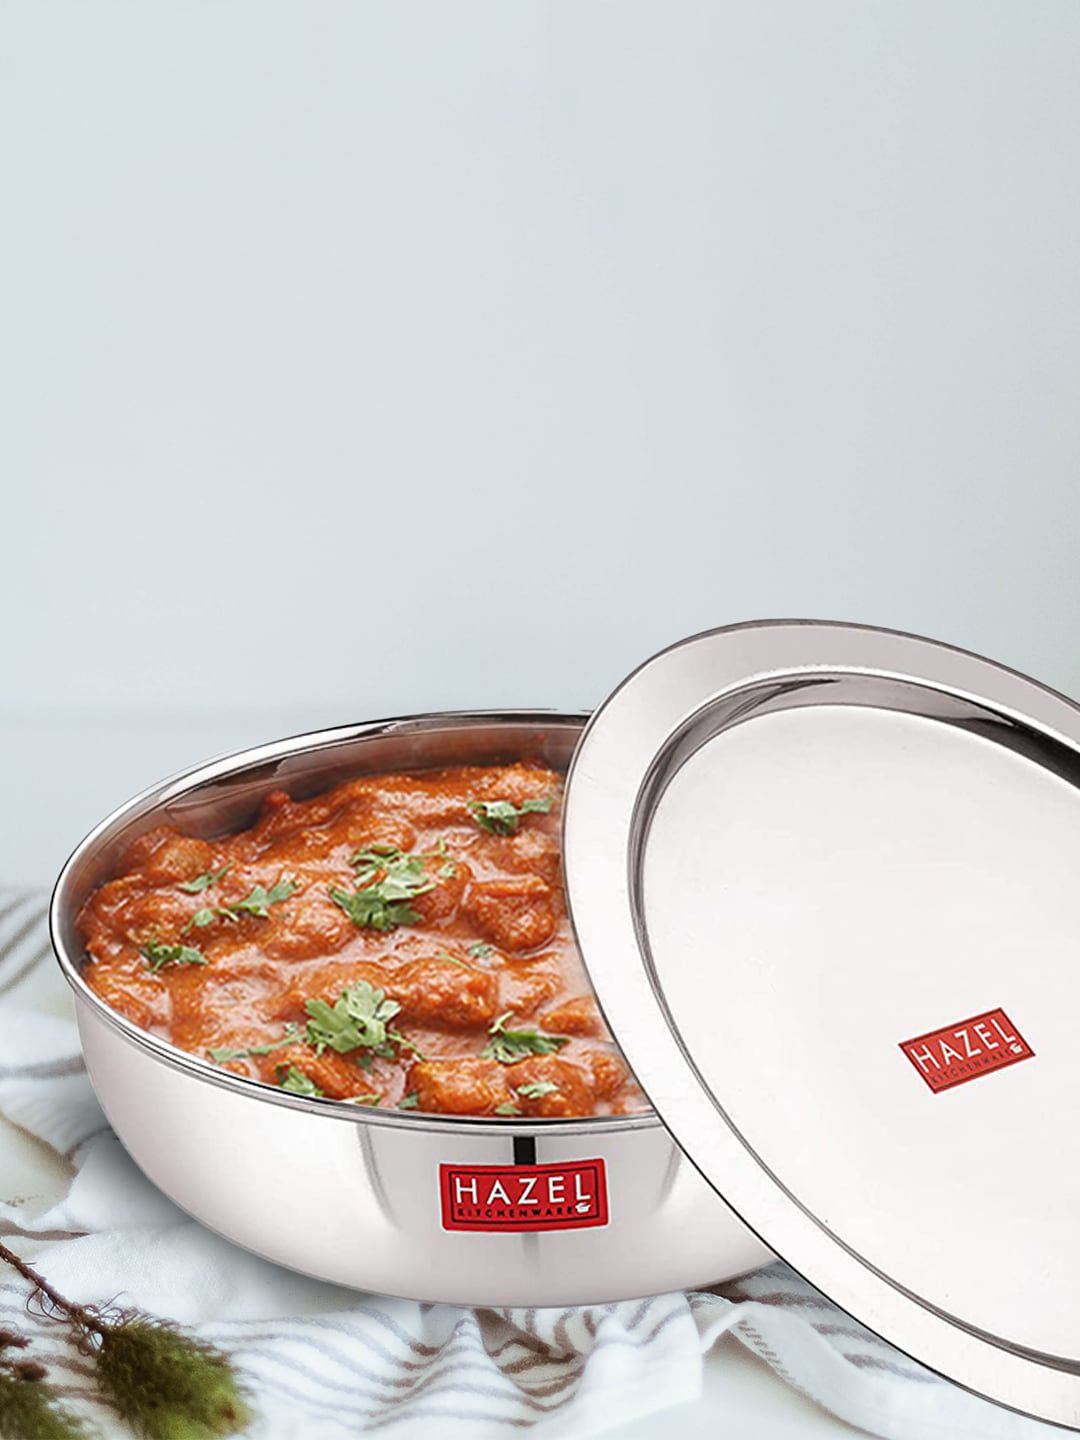 HAZEL Silver-Toned Stainless Steel Tasra Kadai Lid Cookware Price in India